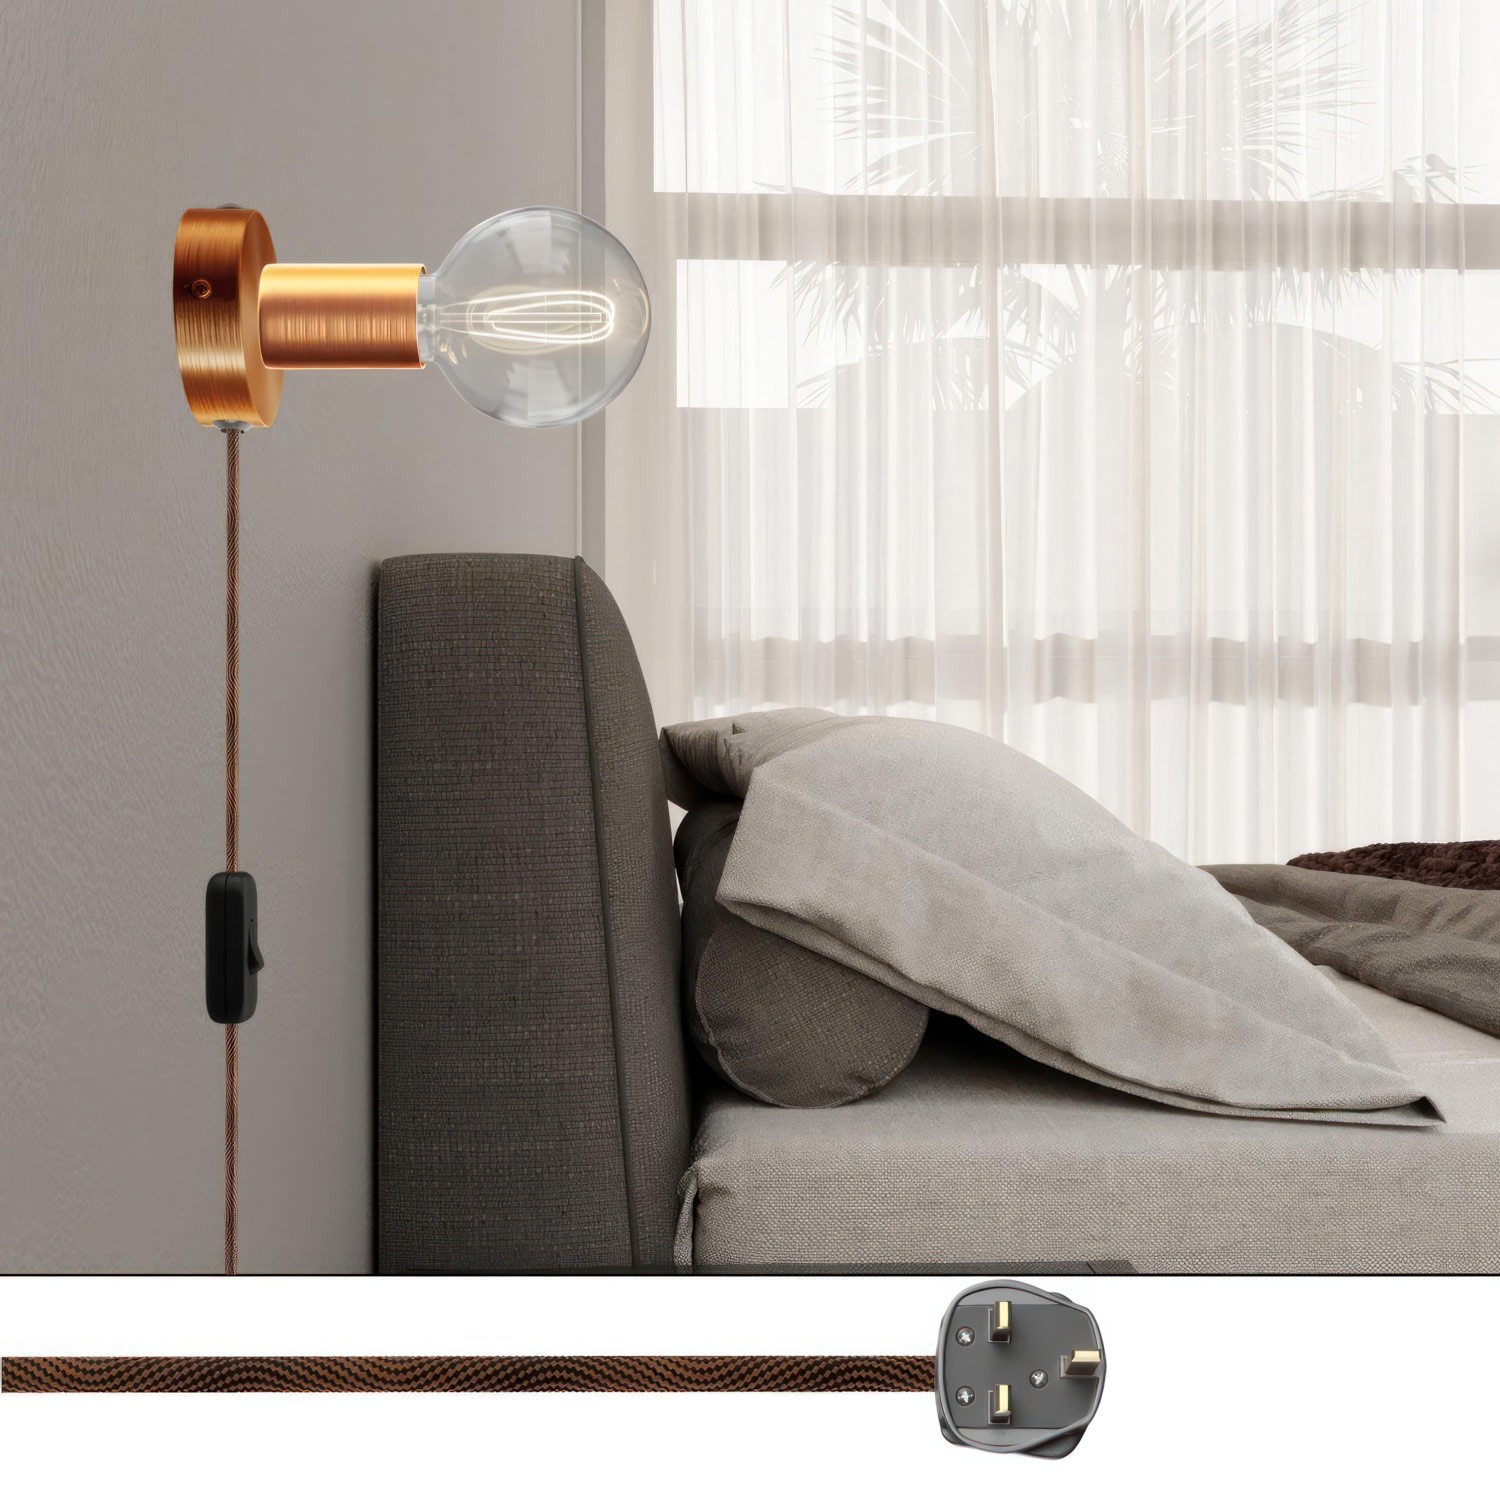 Spostaluce metal Lamp with UK plug